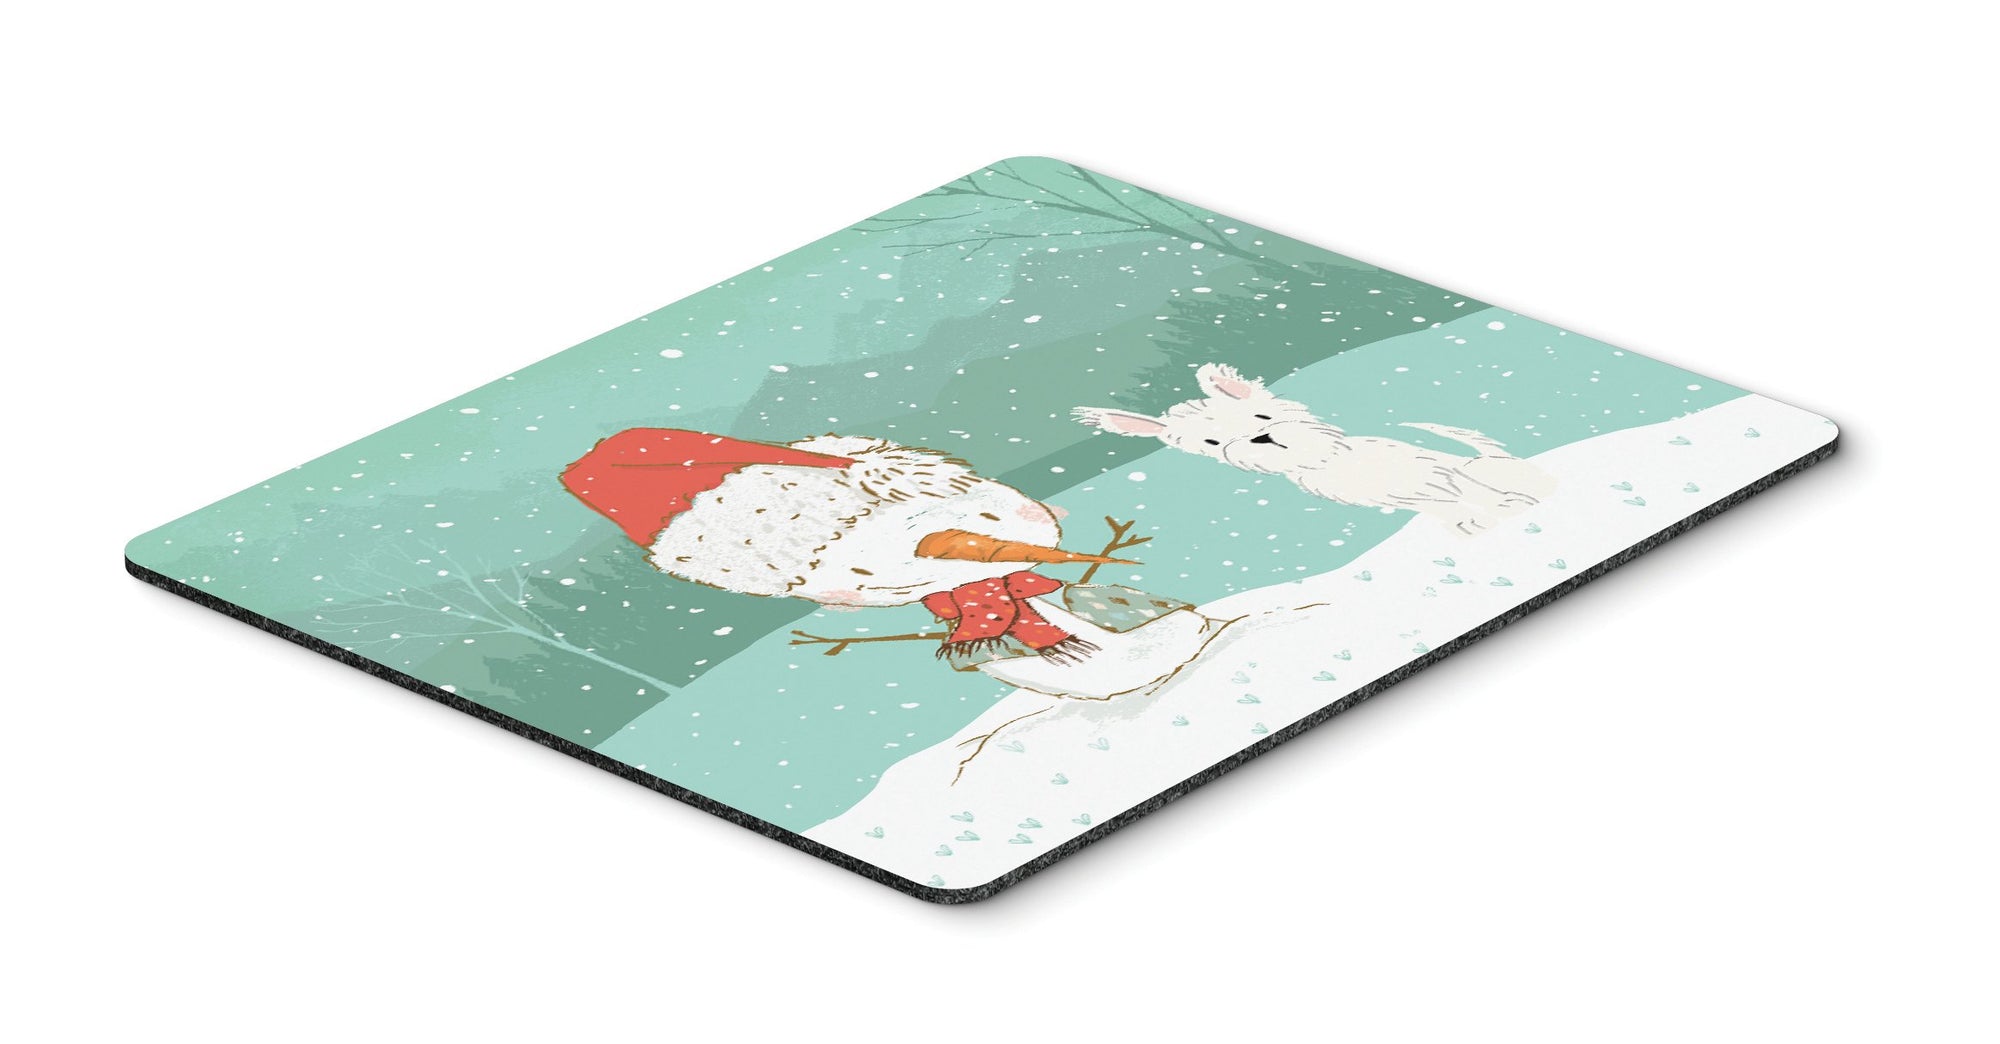 Westie Terrier Snowman Christmas Mouse Pad, Hot Pad or Trivet CK2097MP by Caroline's Treasures